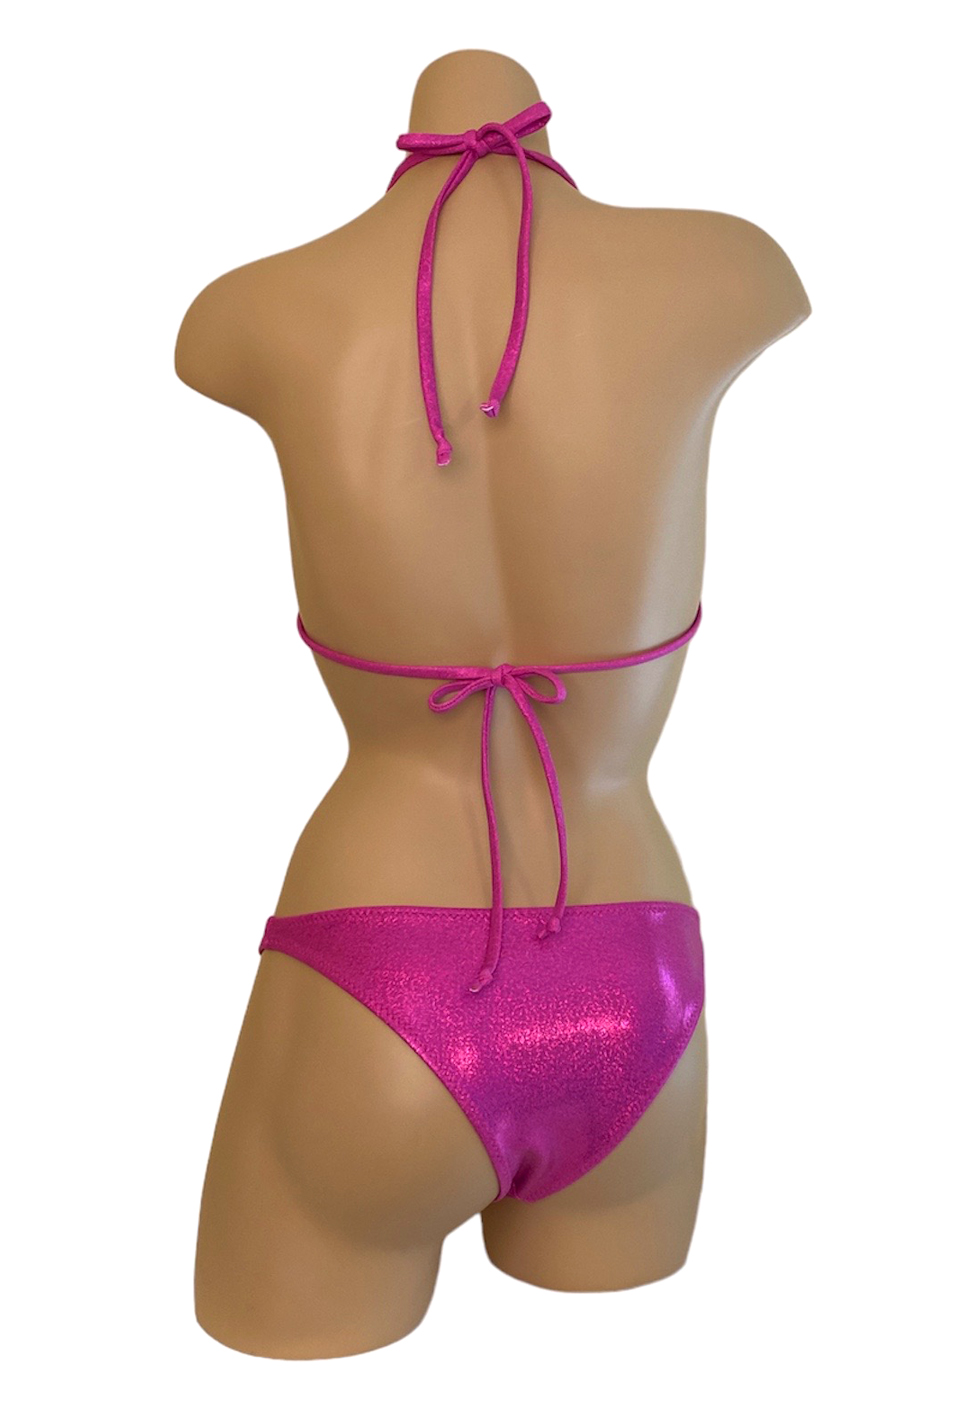 Low waist hip hugging bikini bottoms with triangle bikini top in glitter pink back view